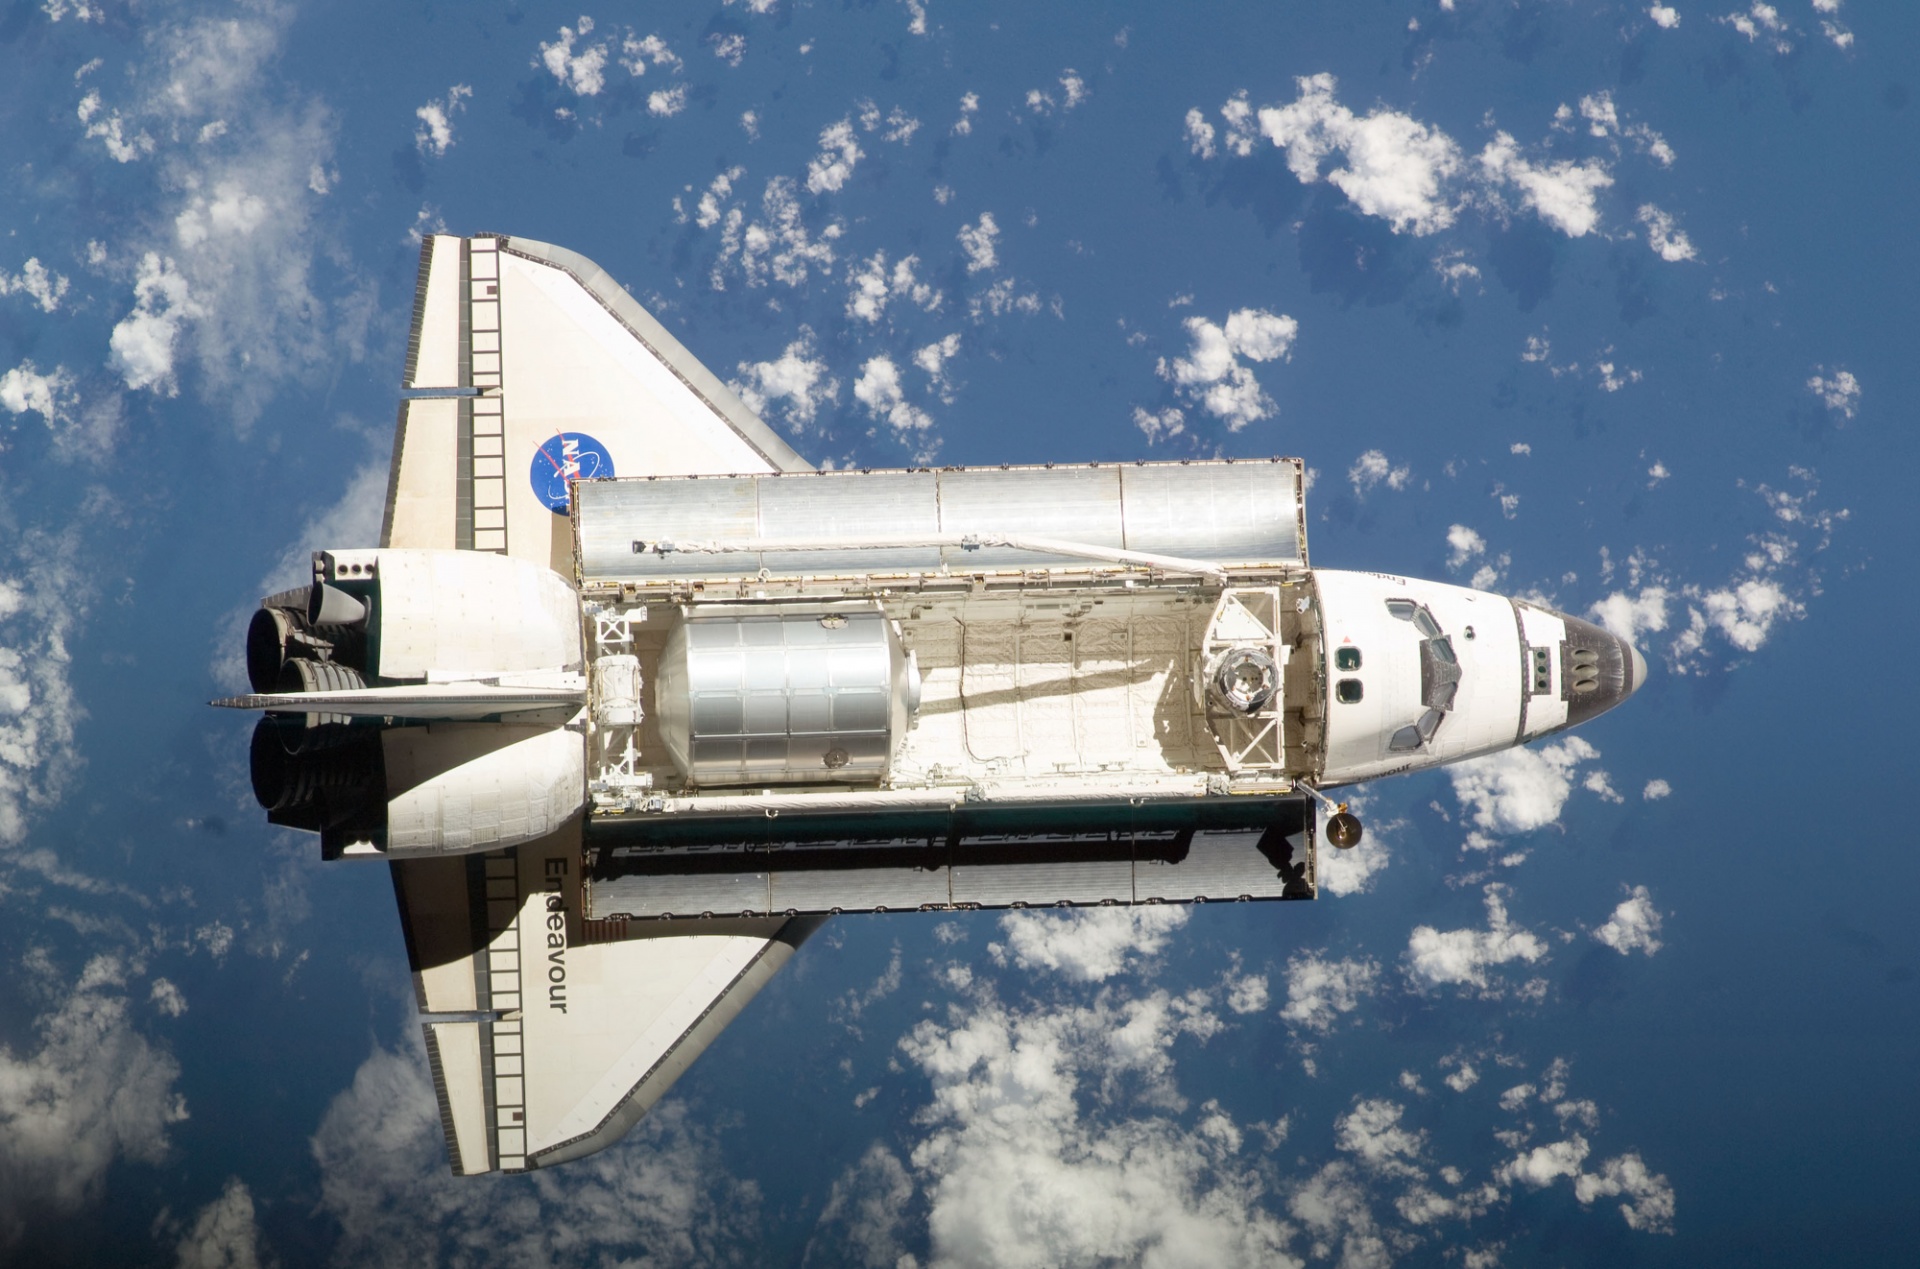 spacecraft space shuttle free photo